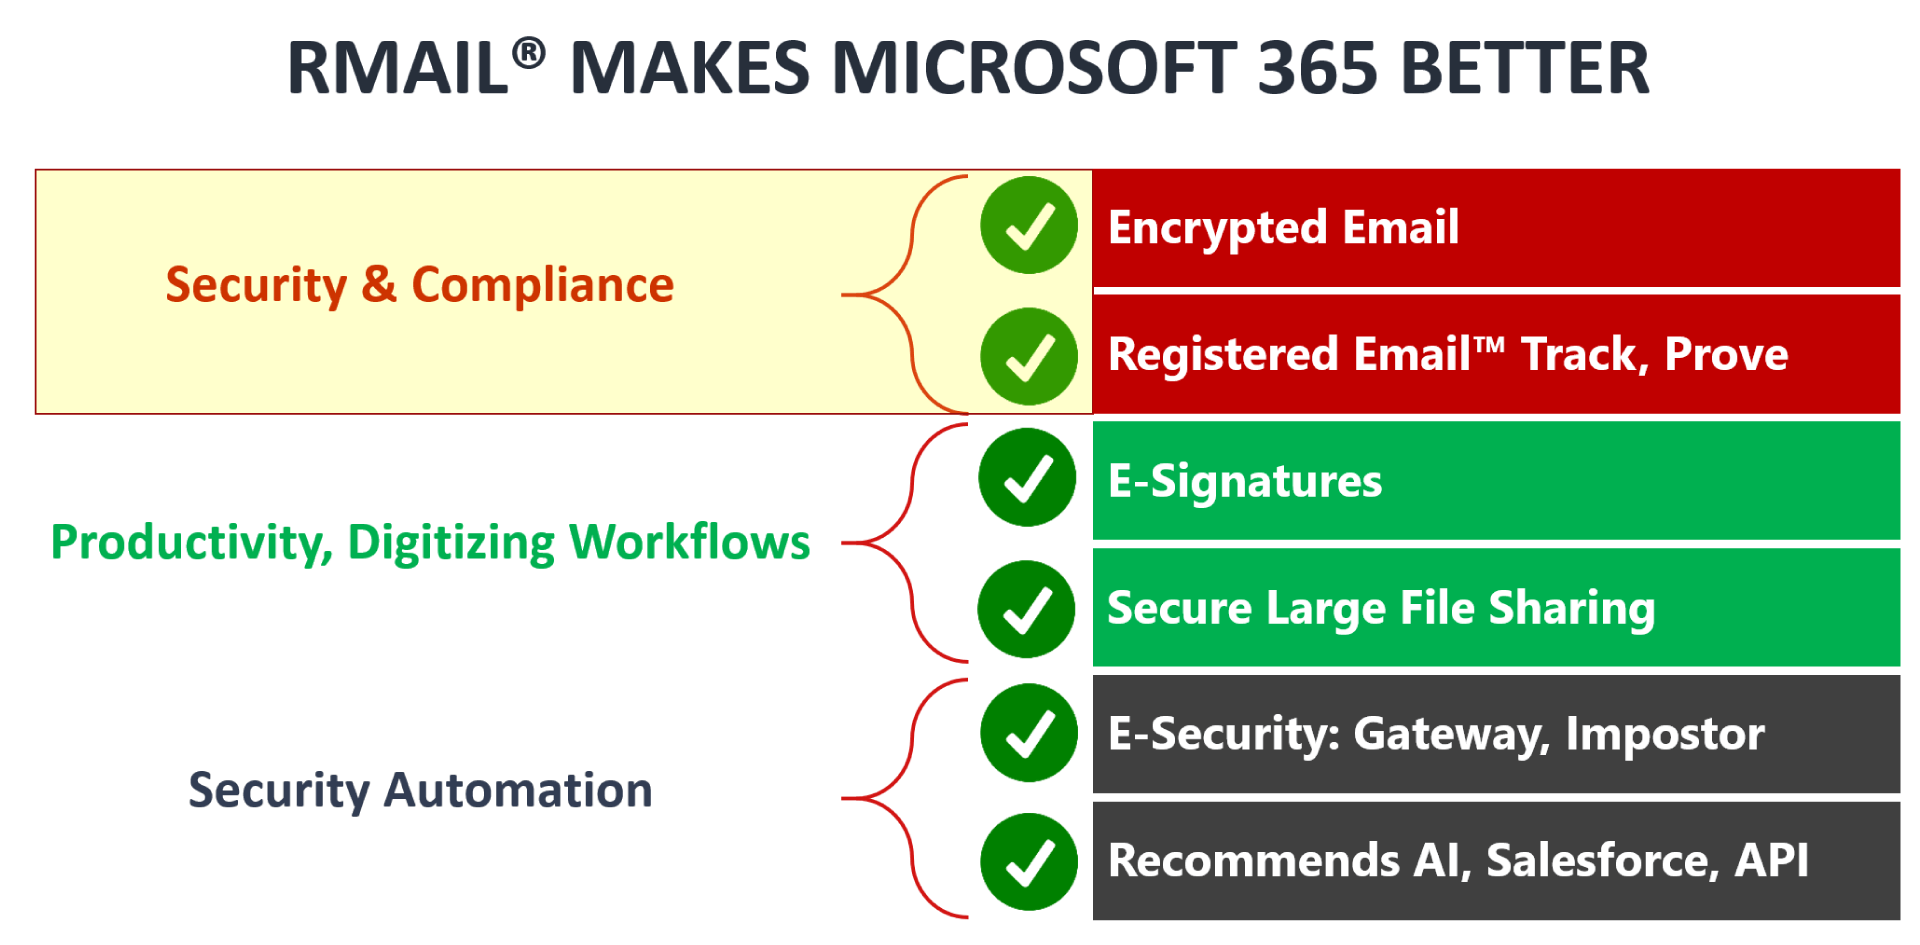 RMail Makes Microsoft 365 Better